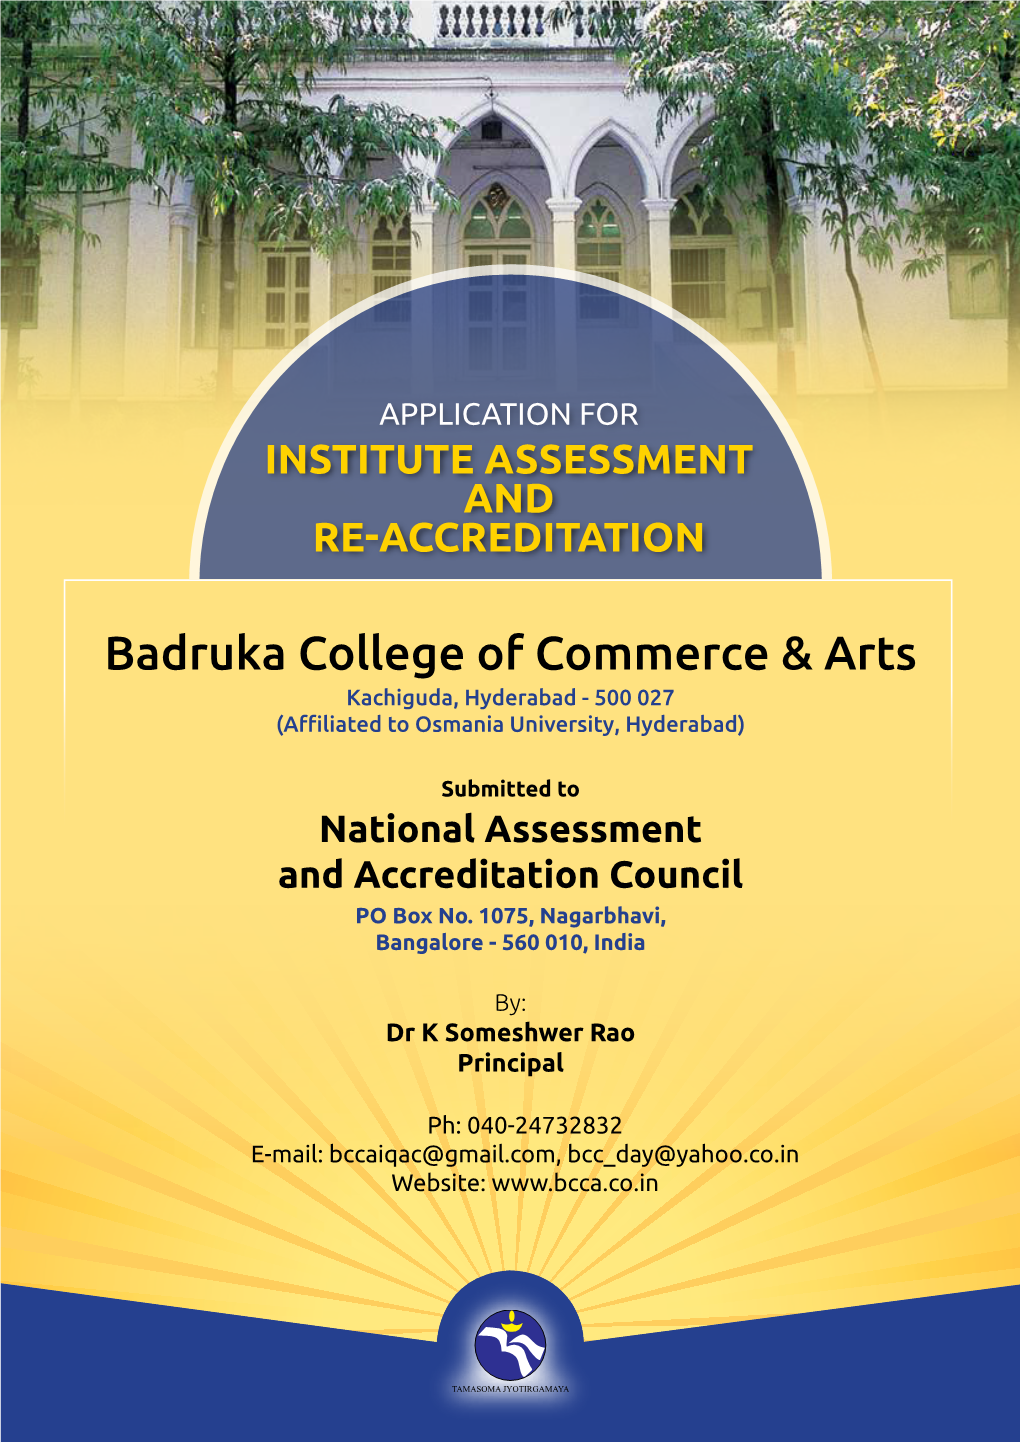 Badruka College of Commerce & Arts